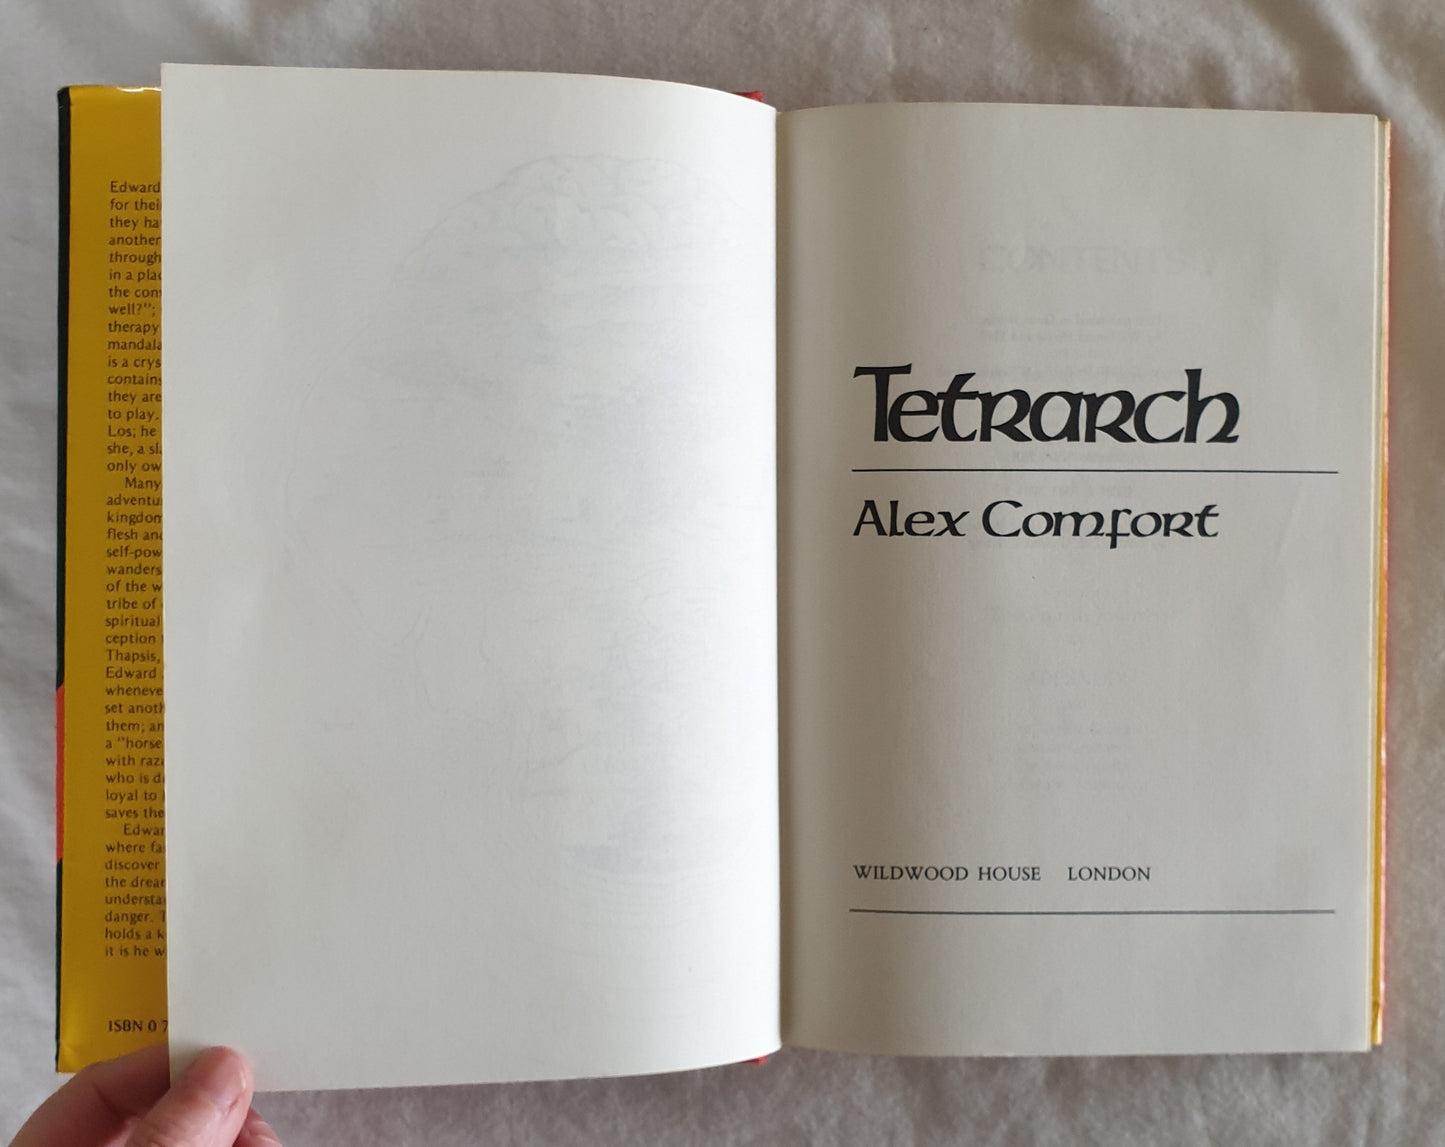 Tetrarch by Alex Comfort